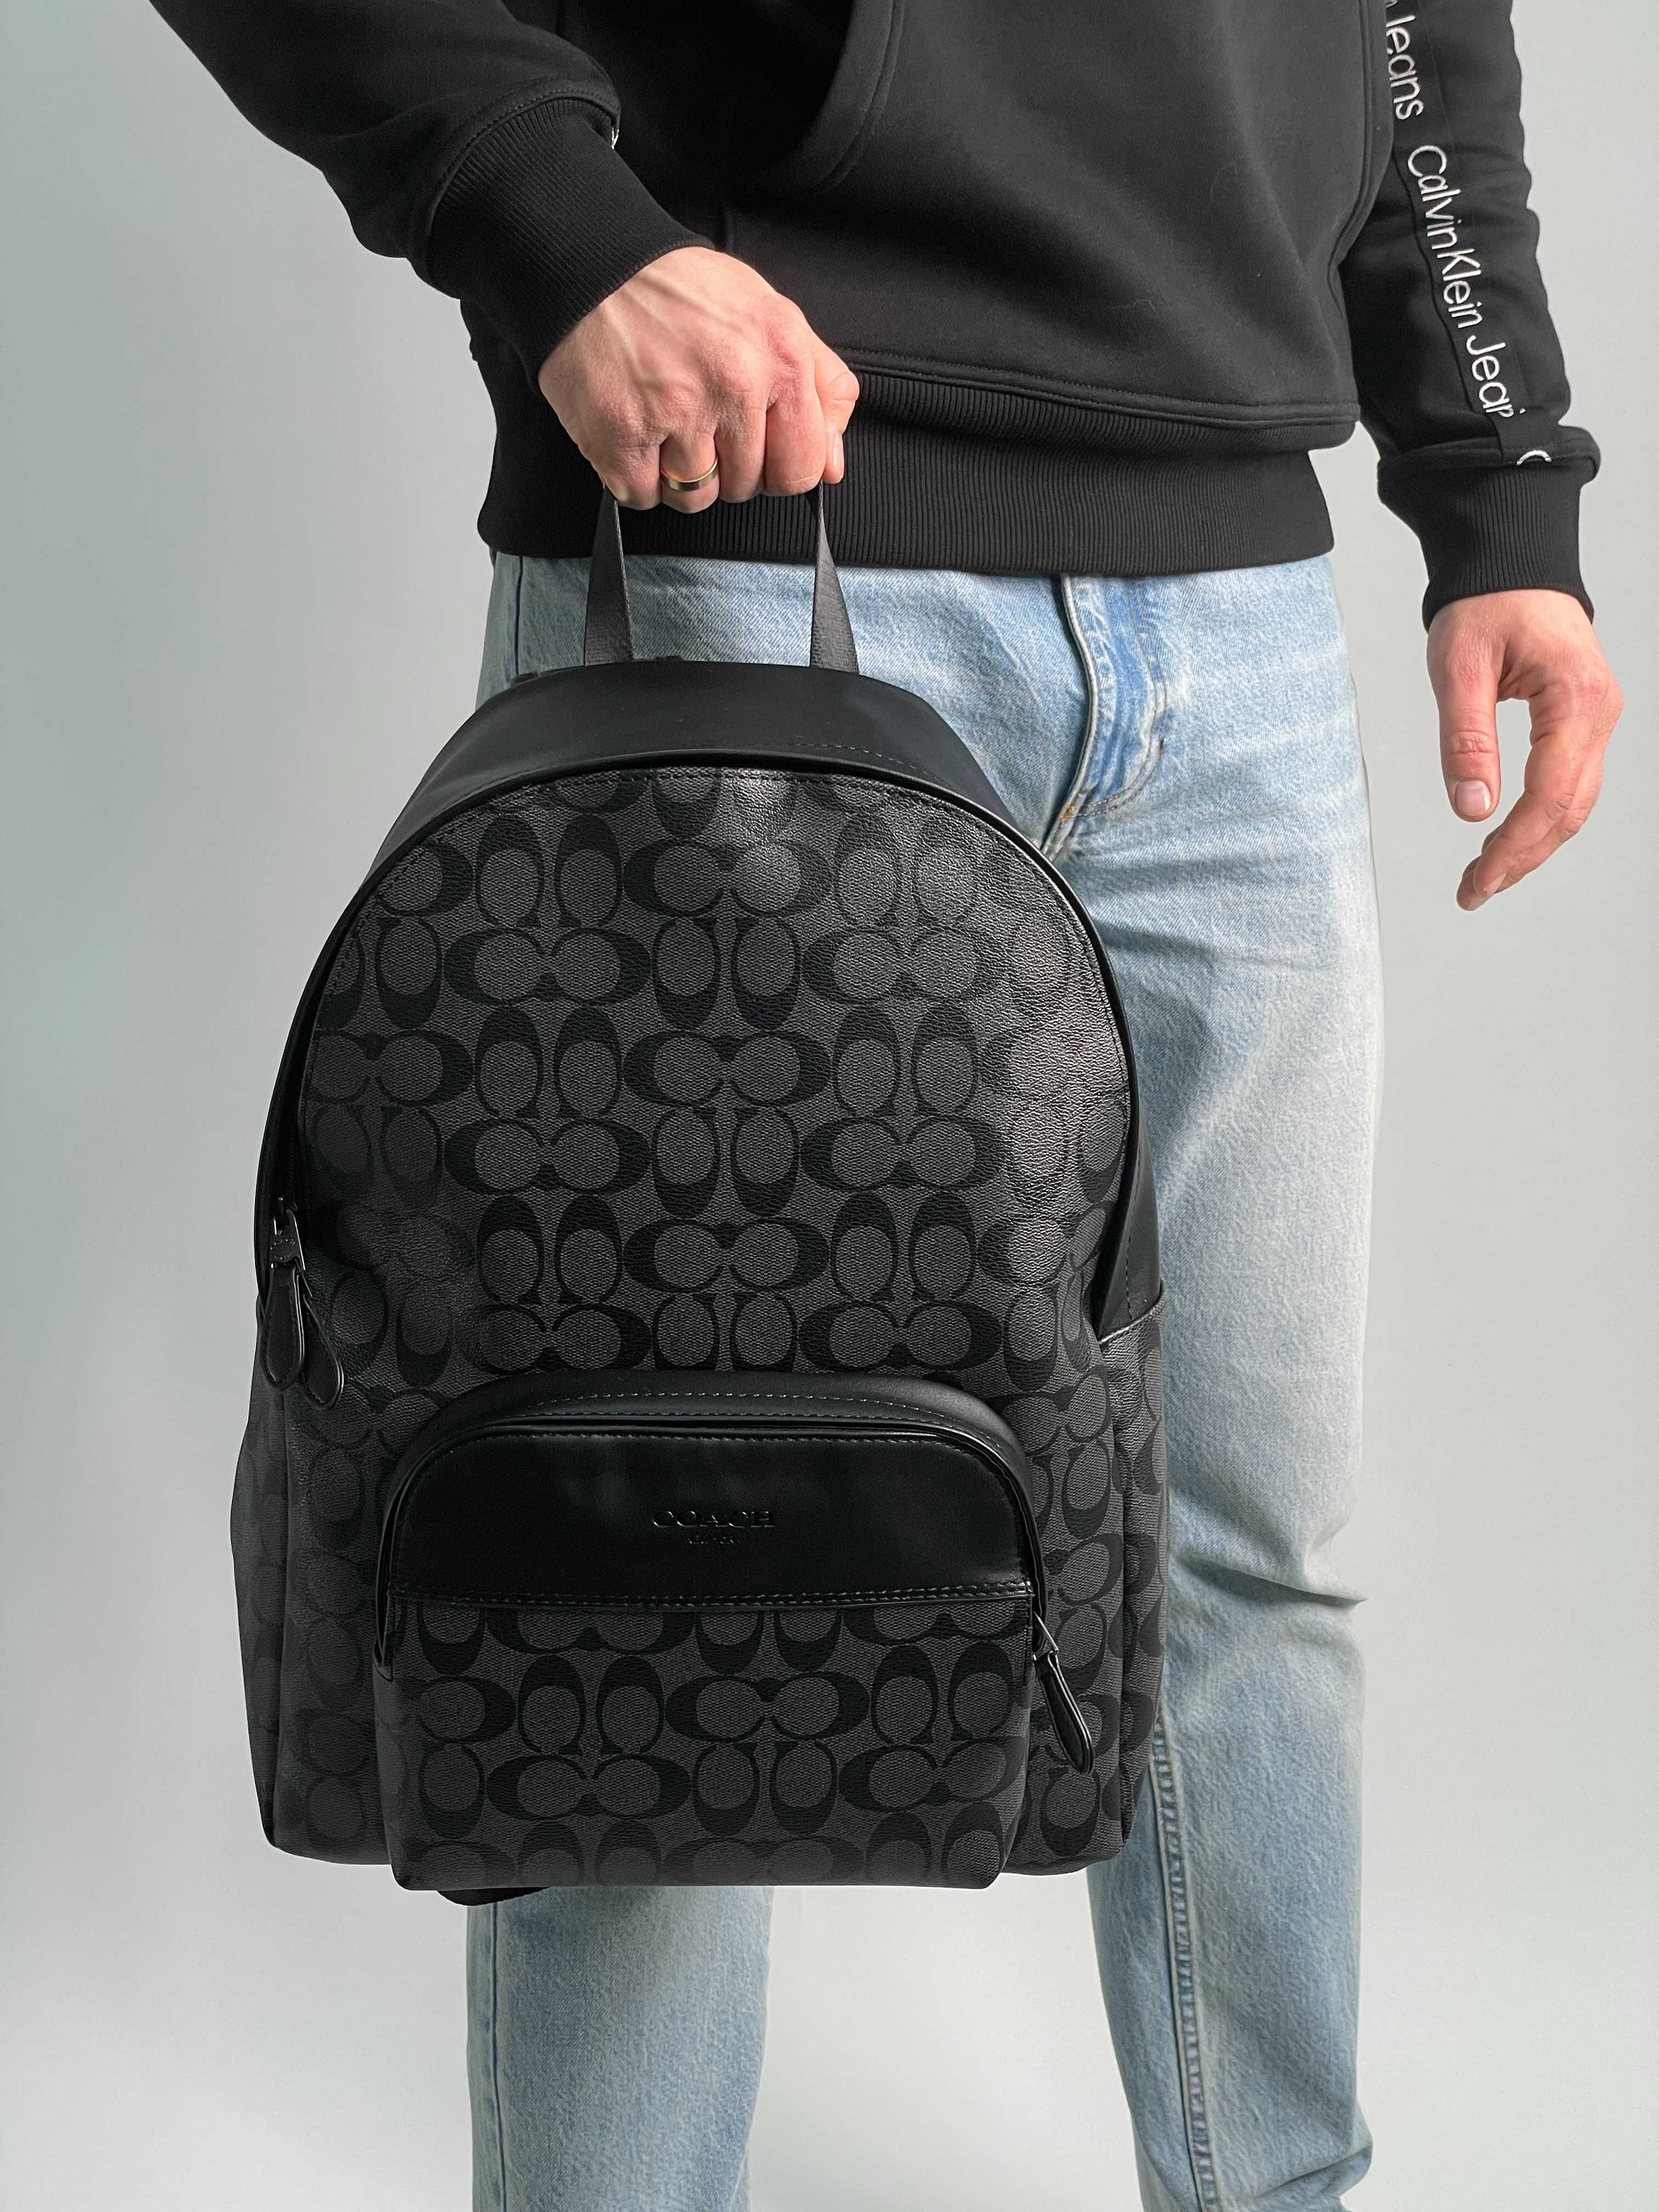 Чоловічий рюкзак Coach мужской рюкзак для спортивного зала путешествий